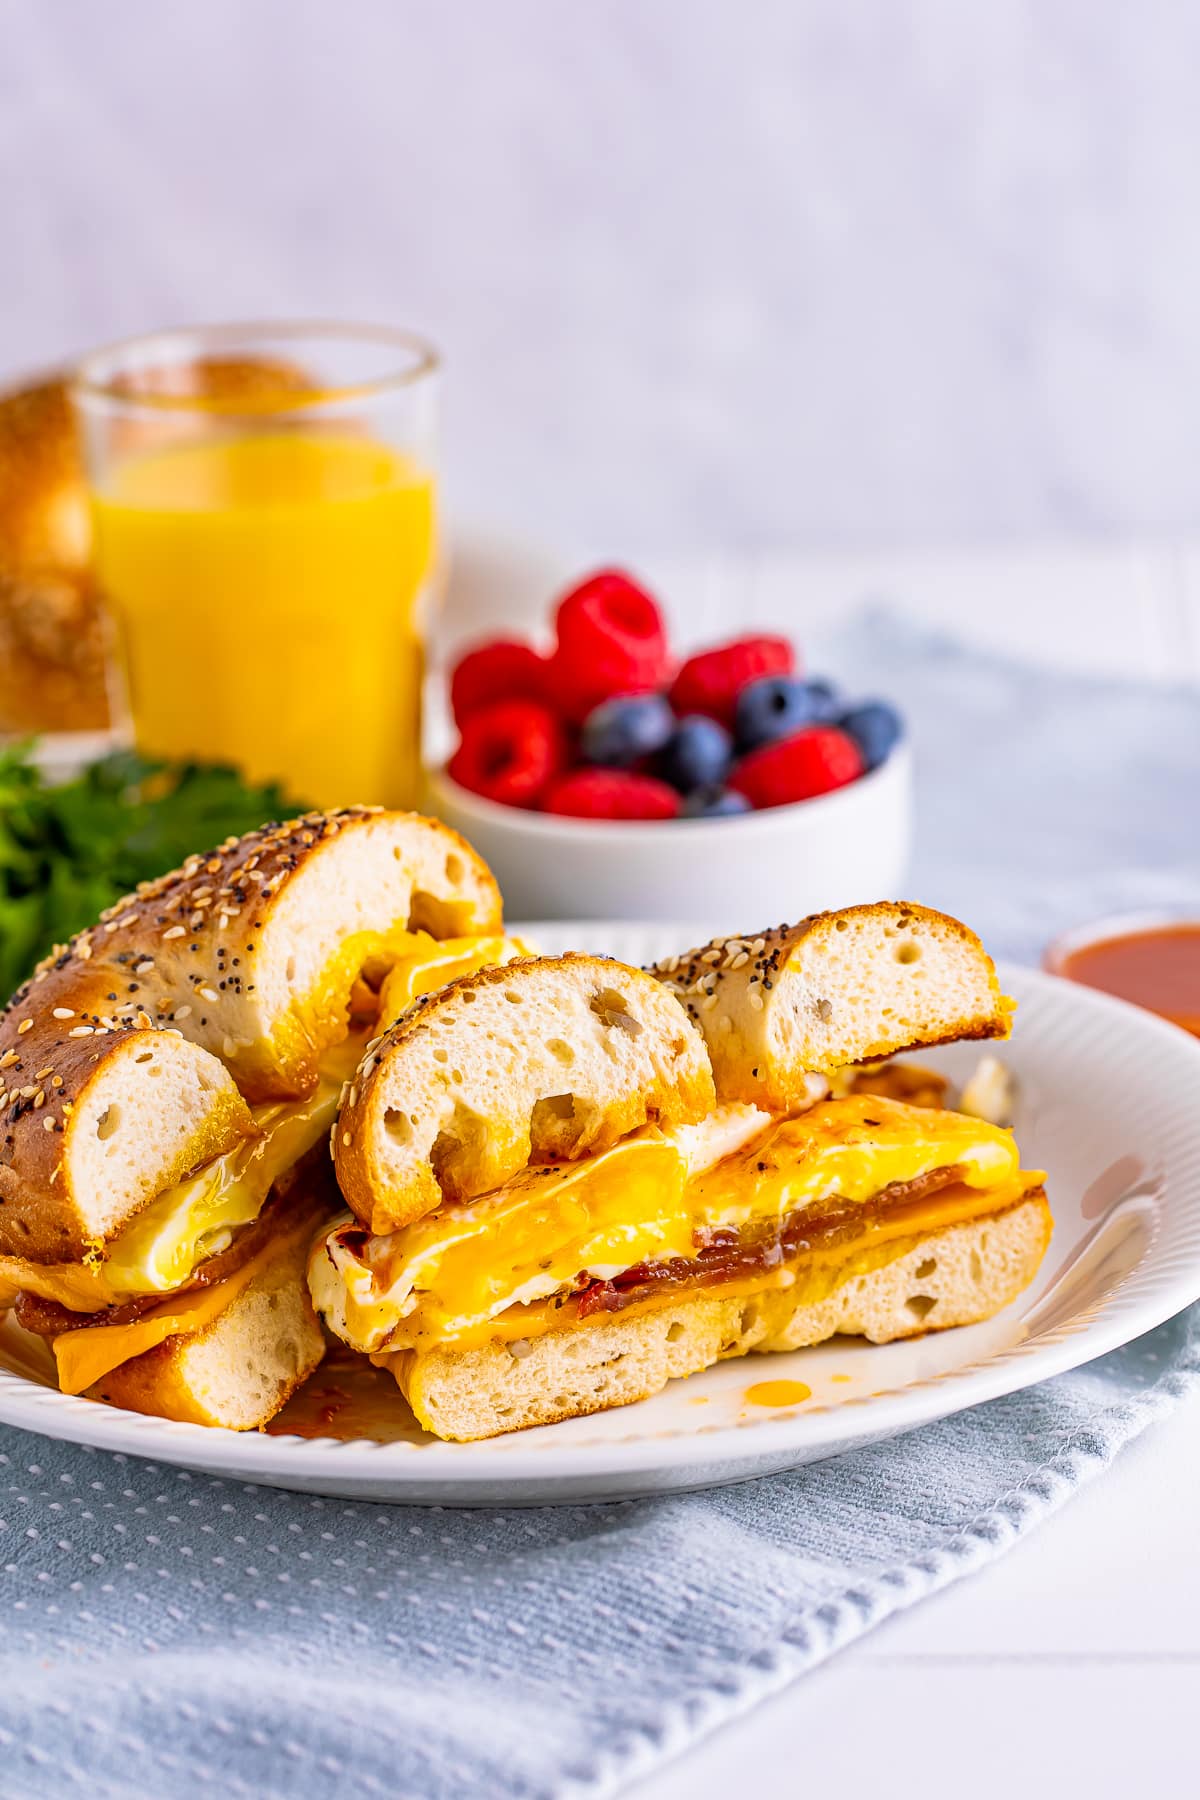 Interior slice shot of Breakfast Bagel Sandwich with drippy egg yolk on white plate, light blue linen, glass of orange juice, small bowl of berries